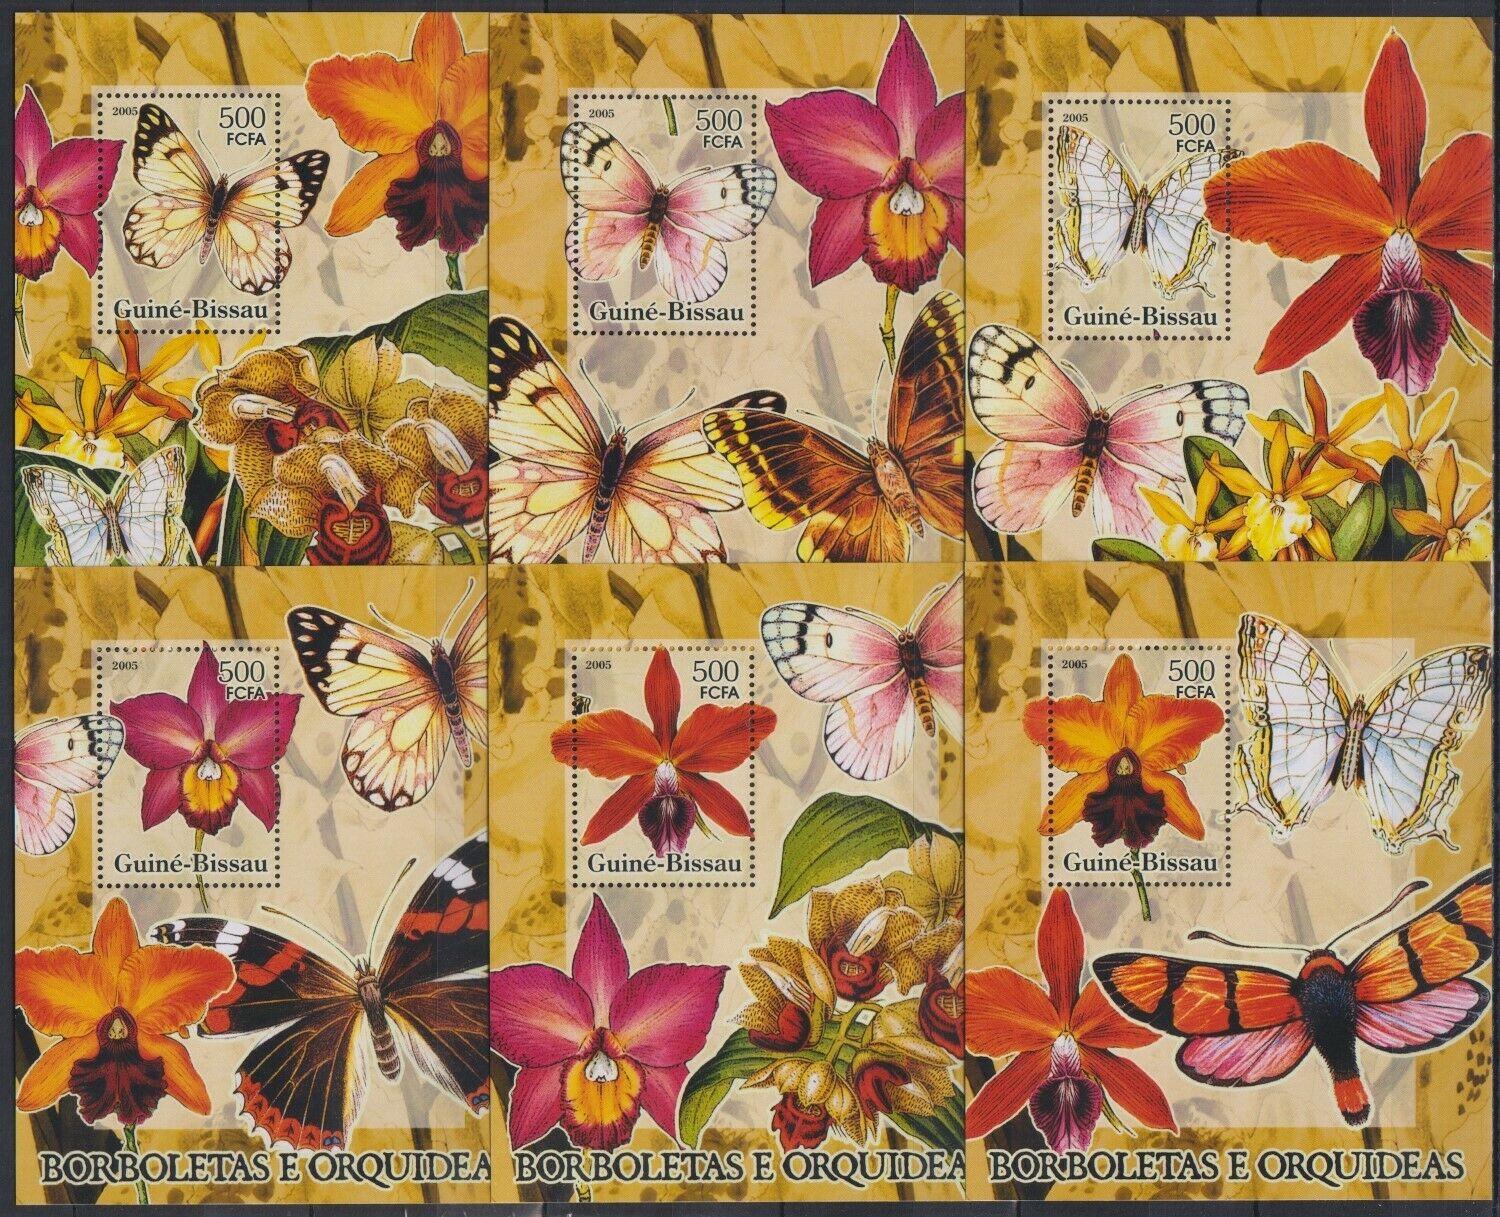 St103pd. Guinea-bissau - Mnh - Butterflies - 2005 - Deluxe